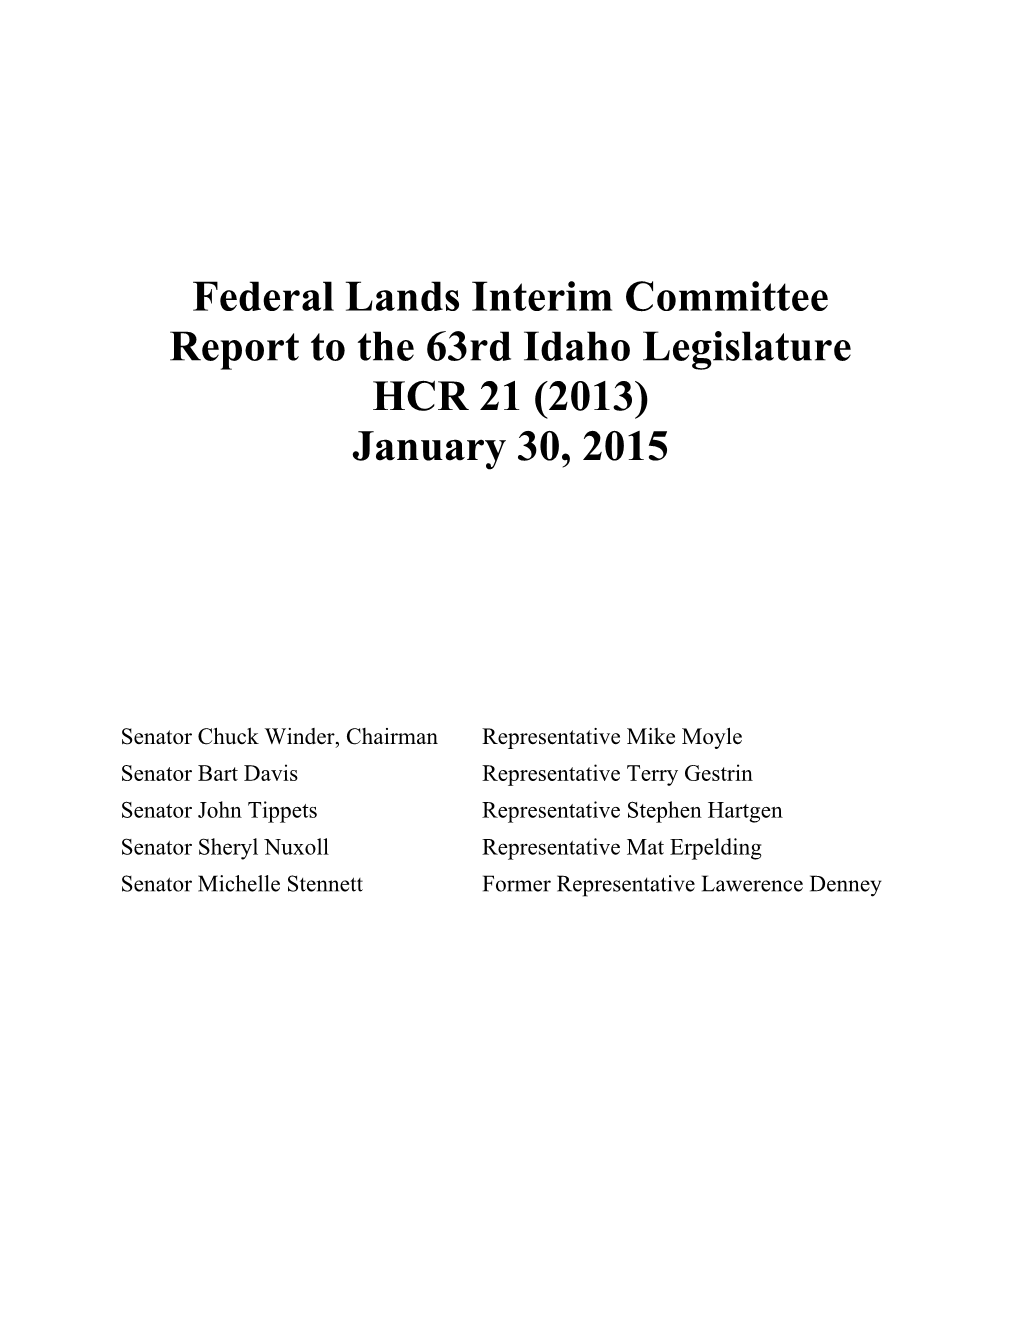 Federal Lands Interim Committee Report to the 63Rd Idaho Legislature HCR 21 (2013) January 30, 2015